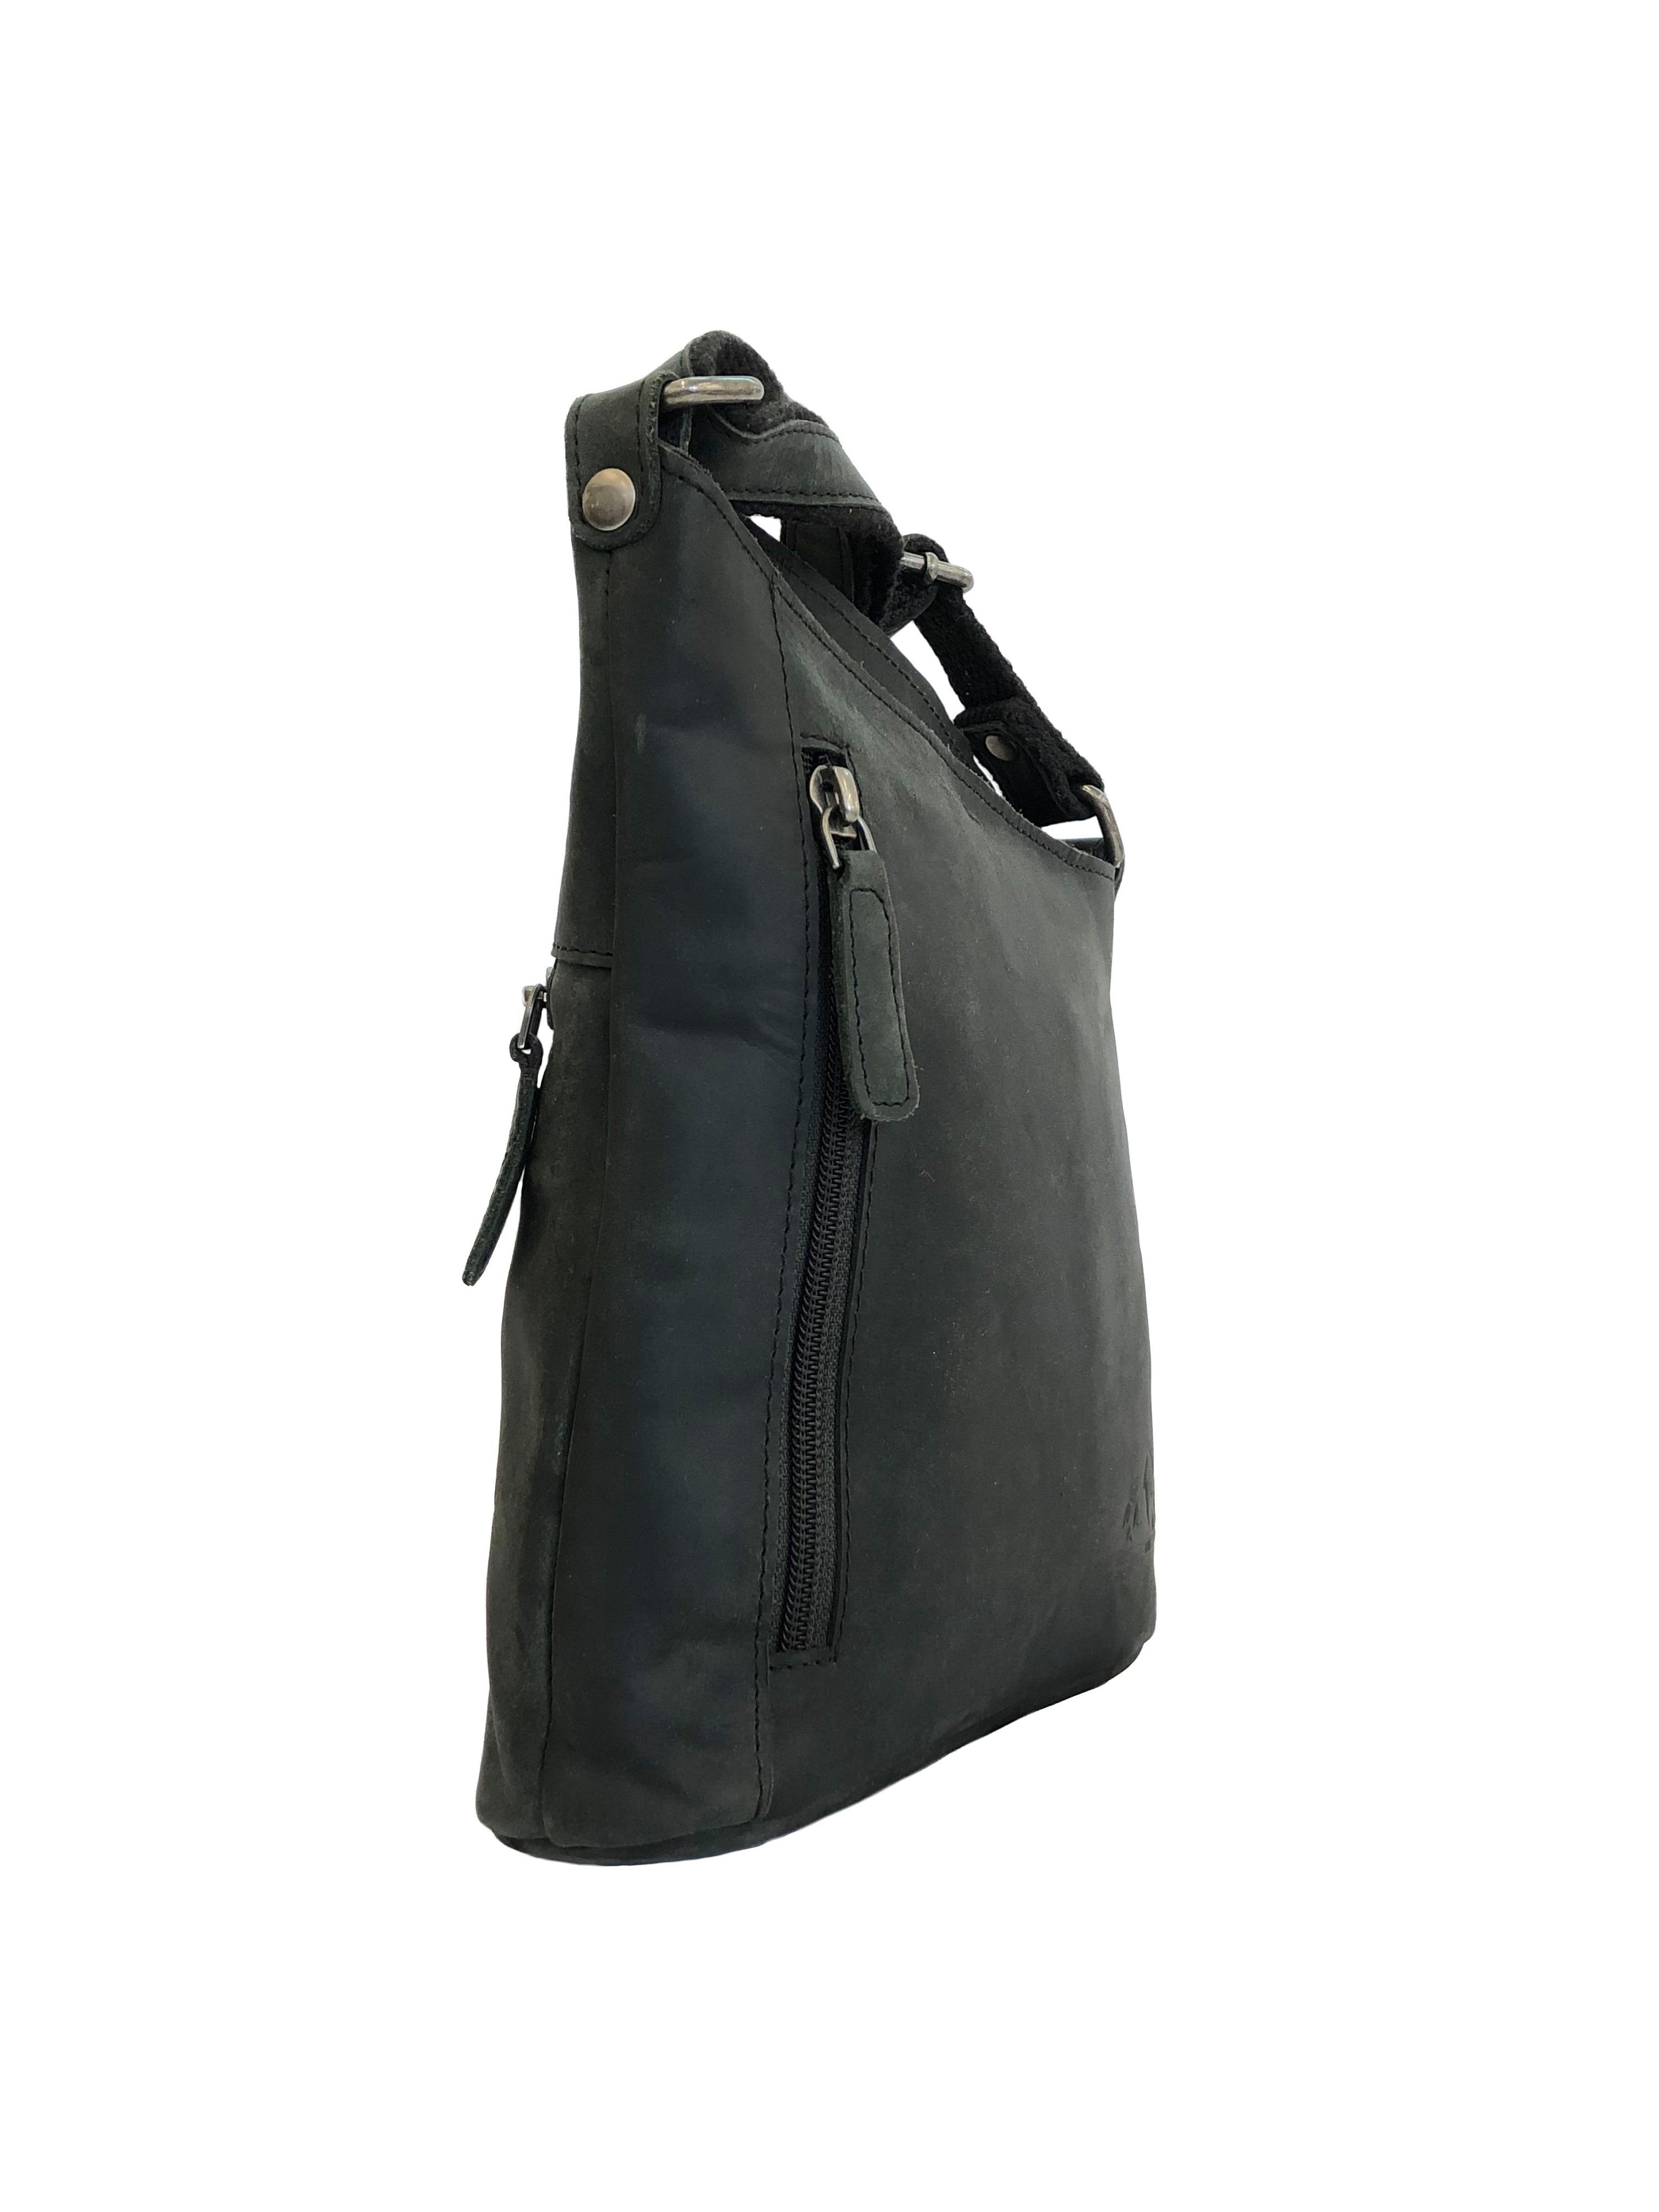 Bayern Bag Bag Ledertasche Umhängetasche Crossbody Vintage Black Handtasche PAULA